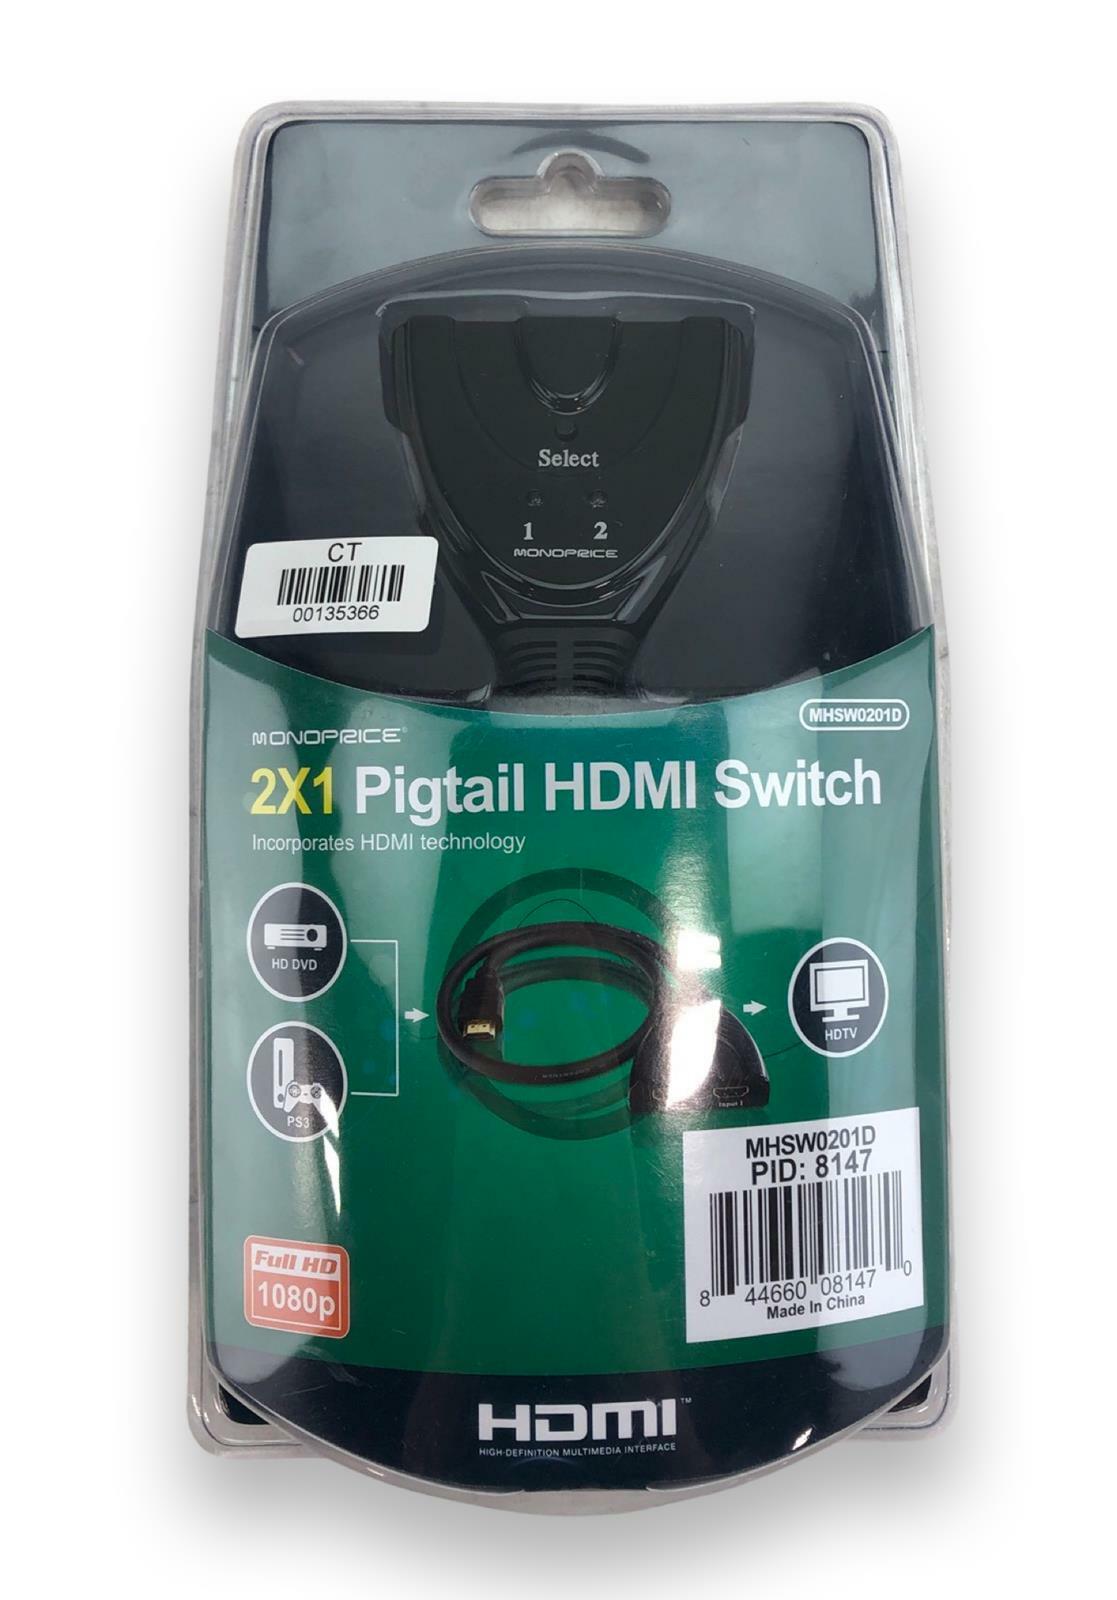 NEW - Monoprice MHSW0201D 2x1 Pigtail HDMI Switcher 1080p Full HD